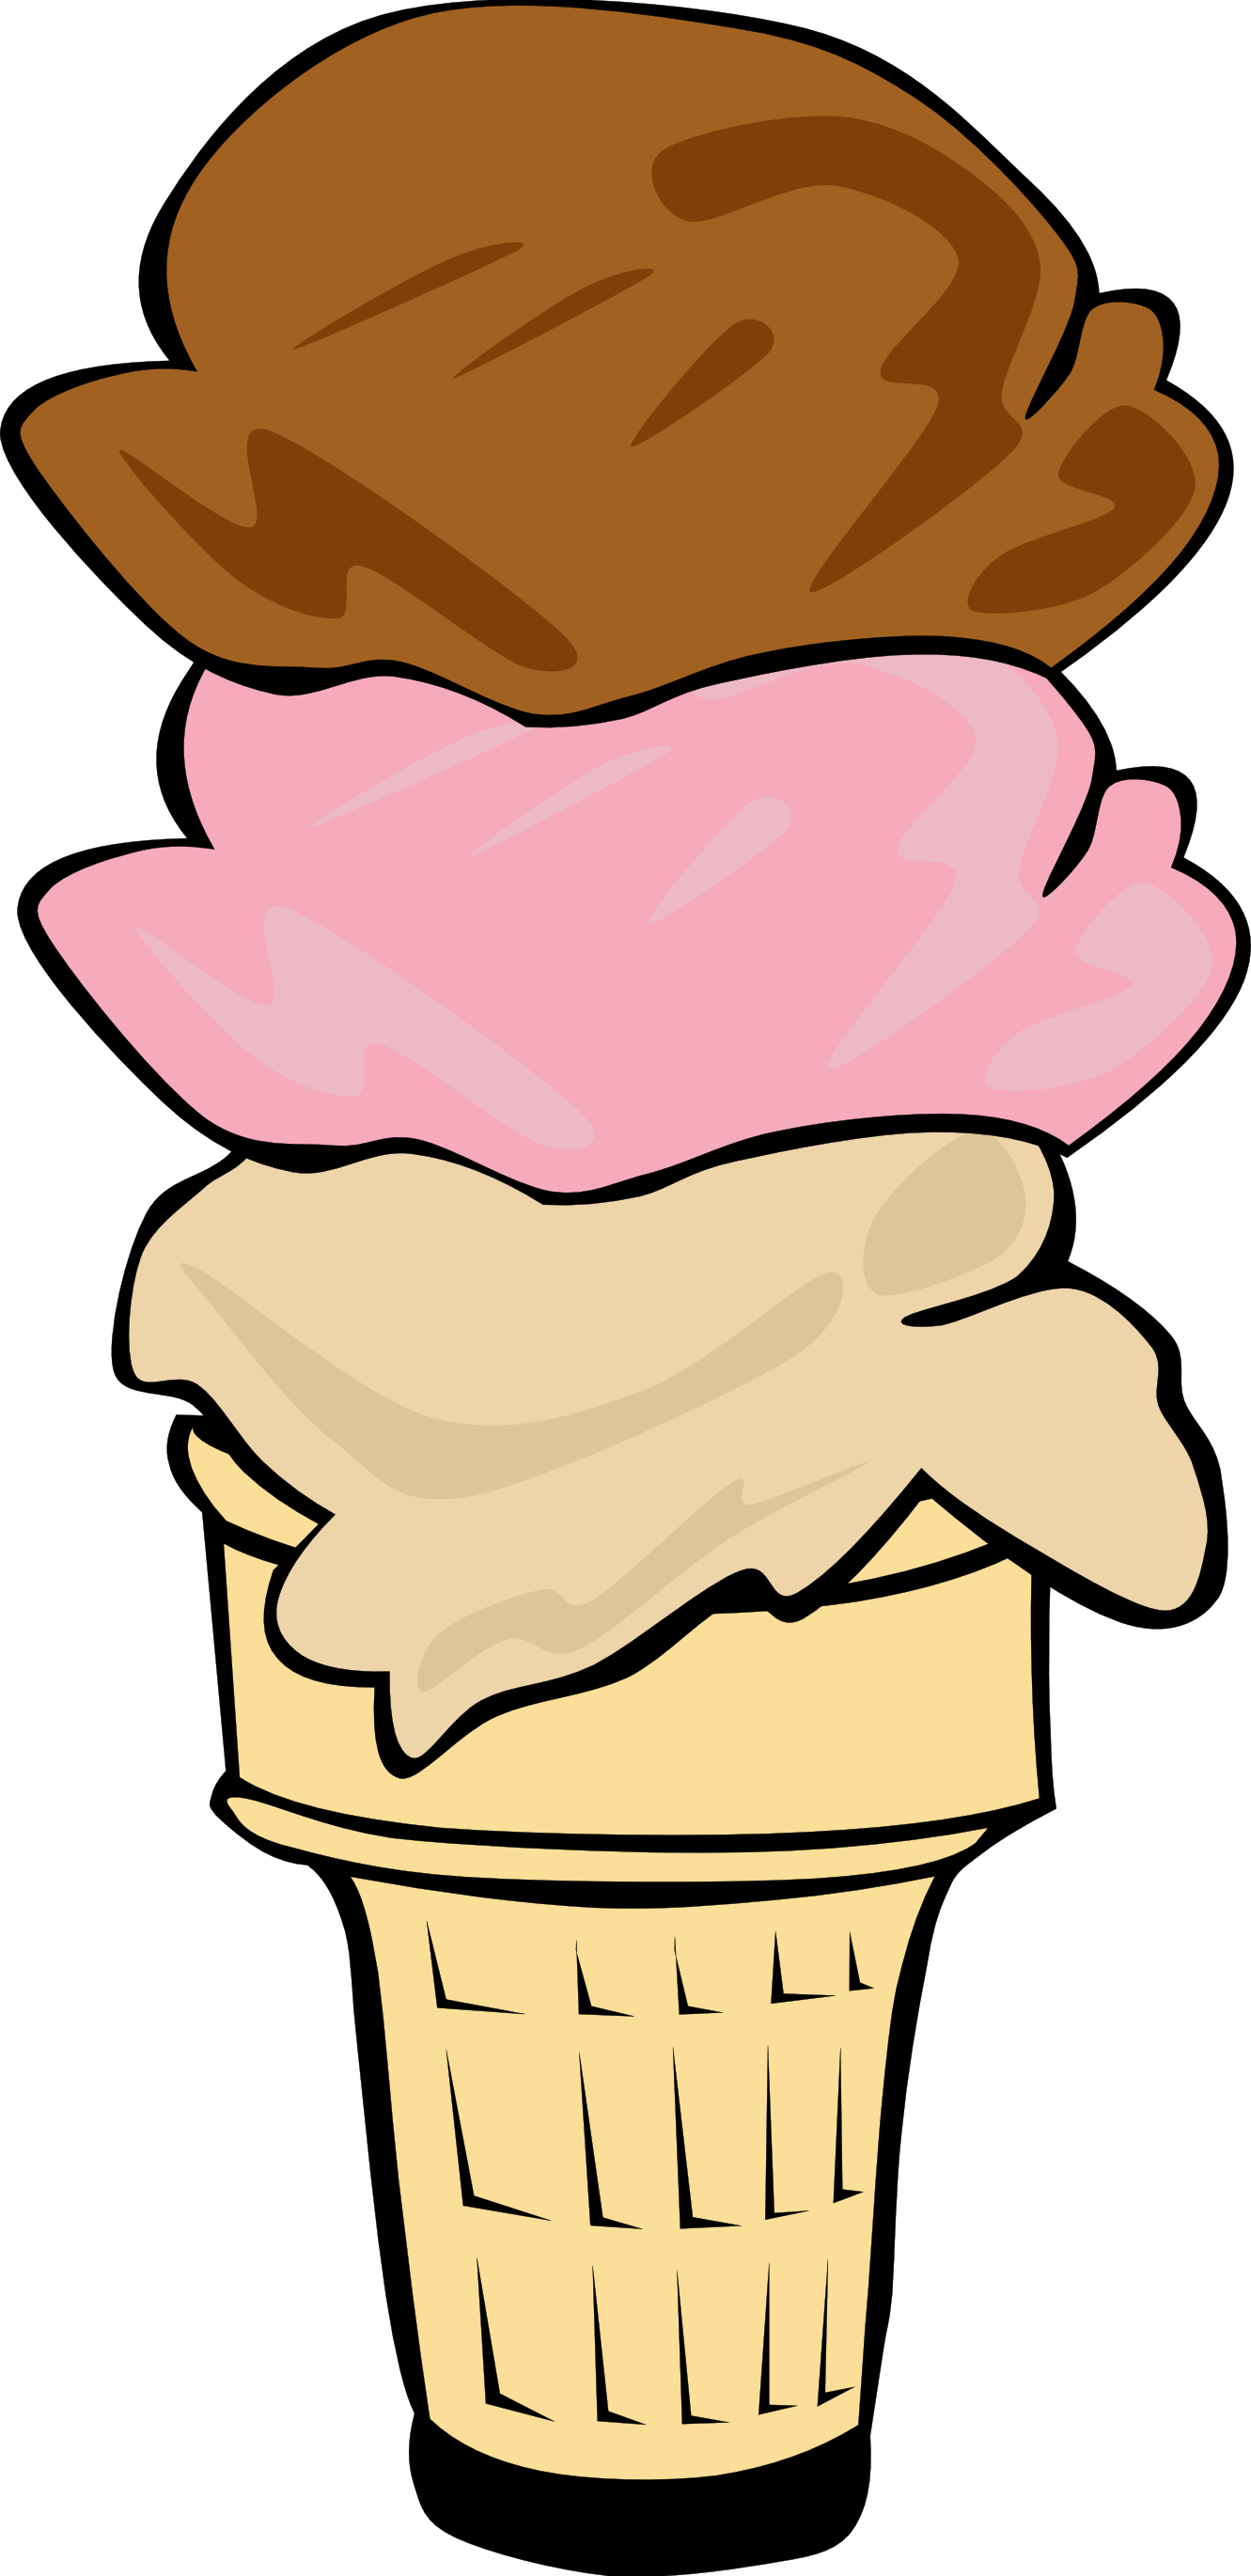 Ice cream scoop clipart no background